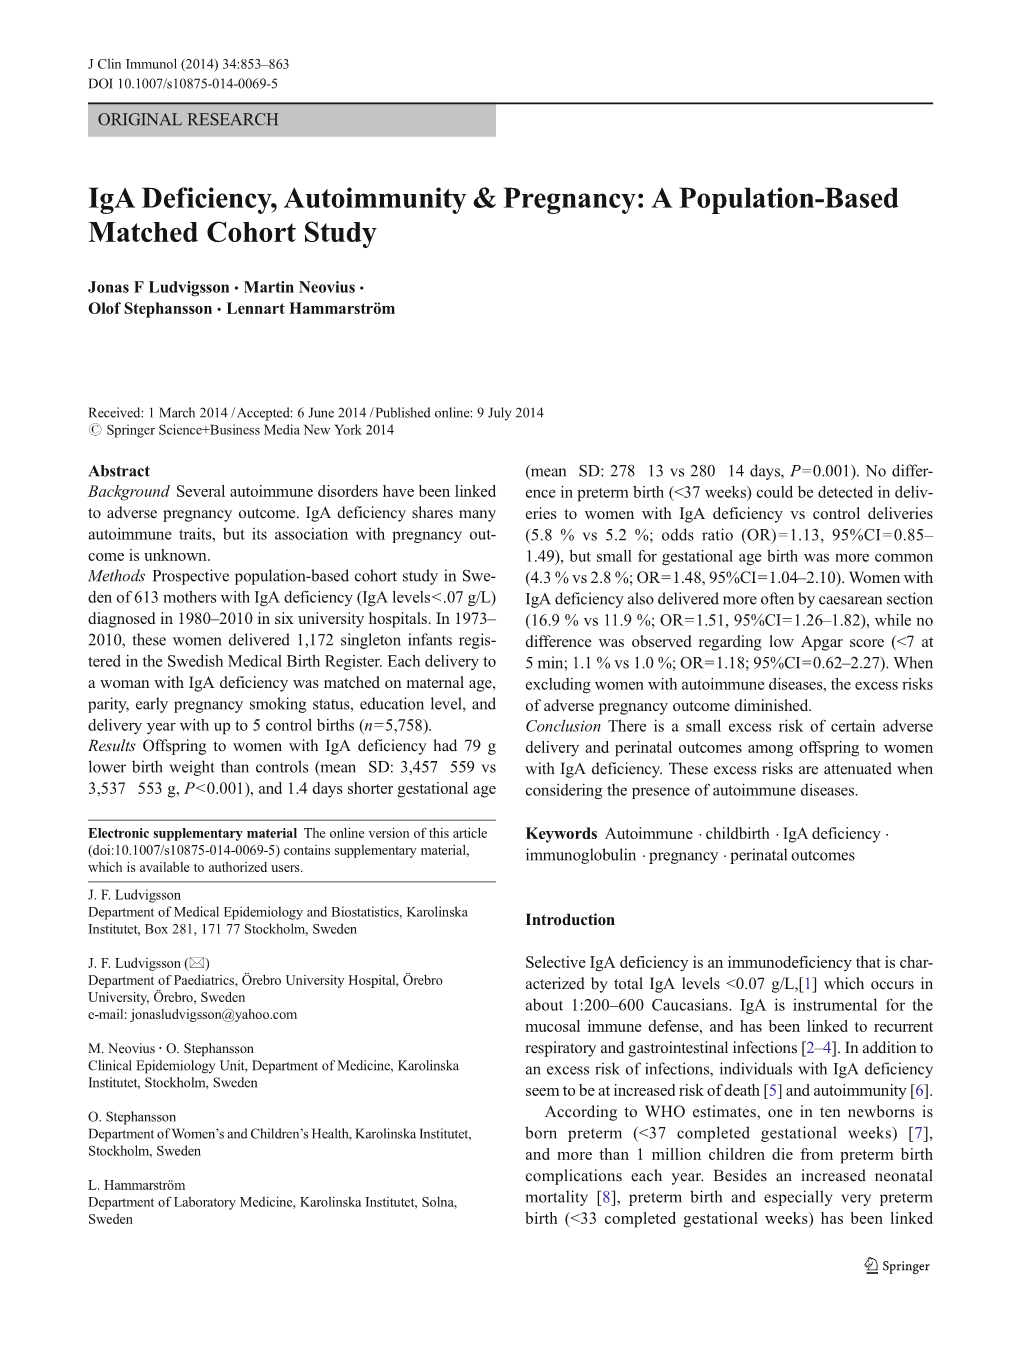 Iga Deficiency, Autoimmunity & Pregnancy